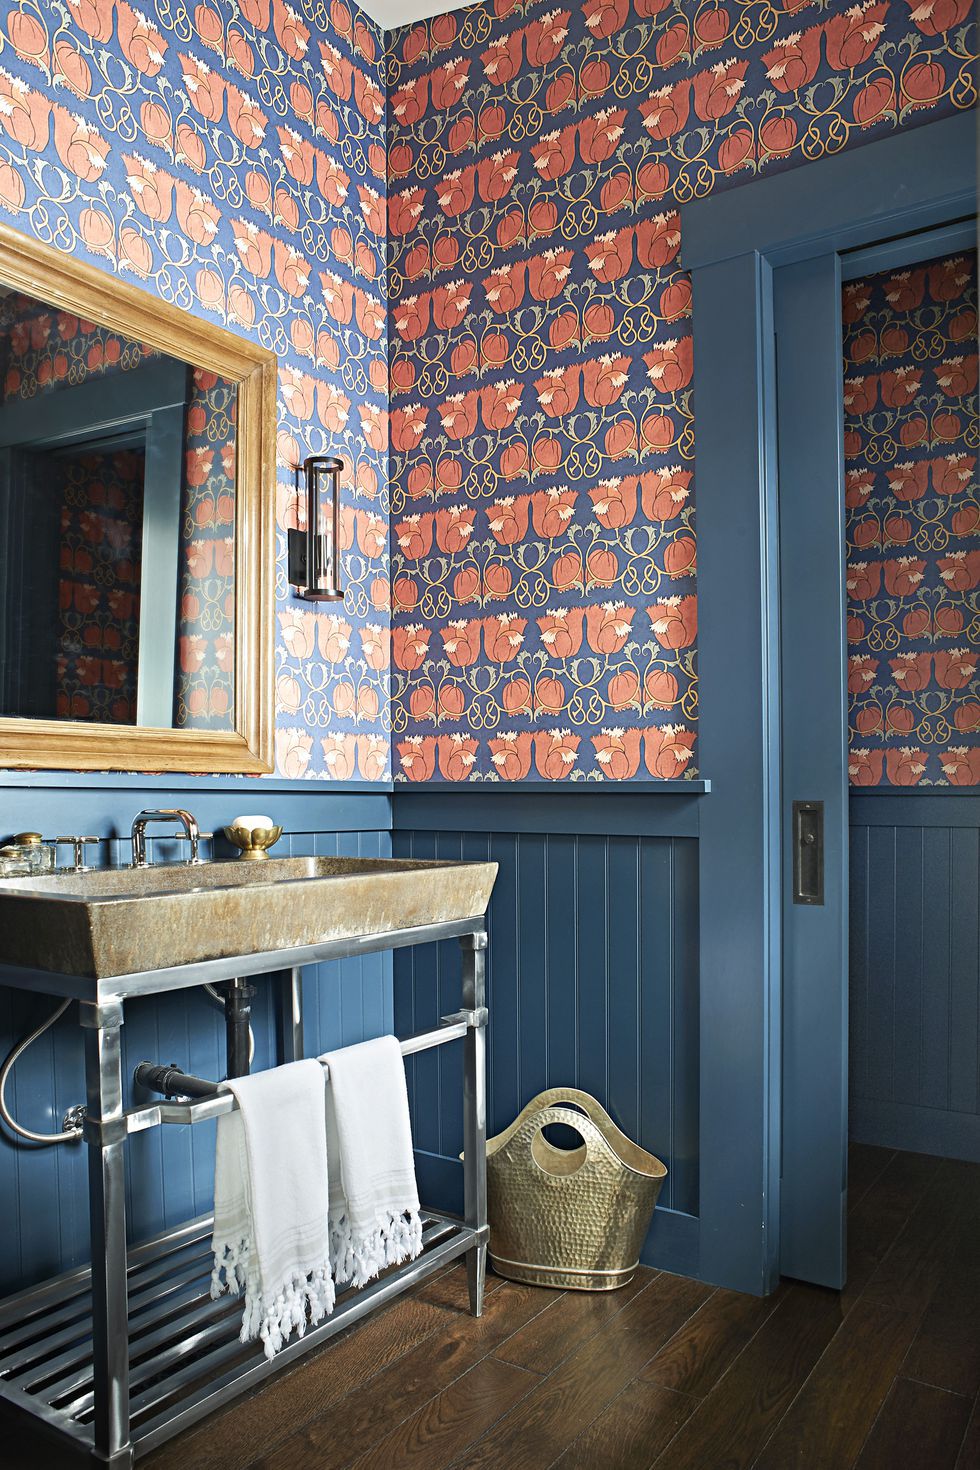 80 Best Bathroom Design Ideas - Gallery of Stylish Small & Large